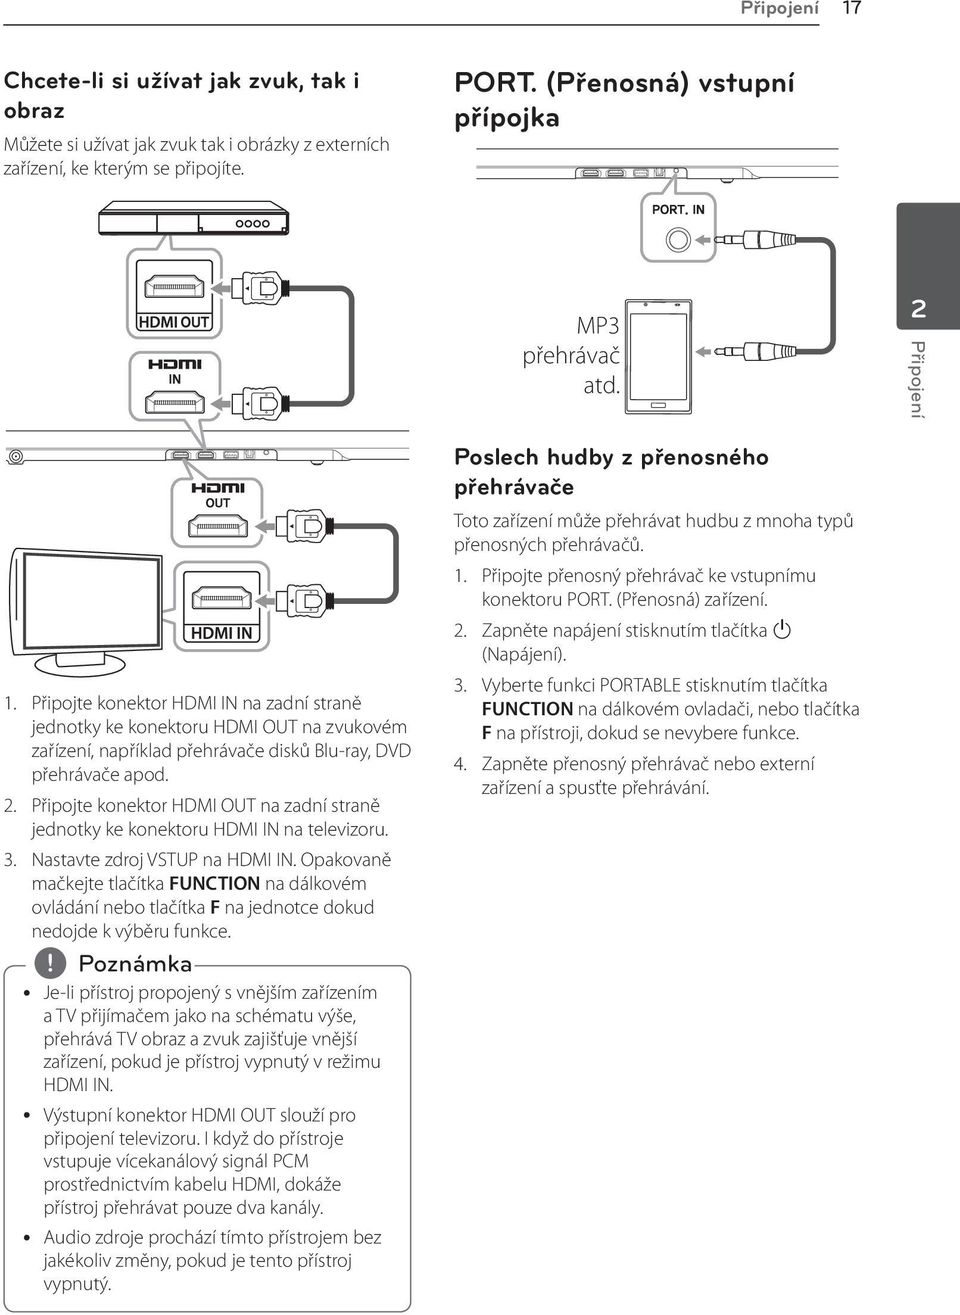 Připojte konektor HDMI OUT na zadní straně jednotky ke konektoru HDMI IN na televizoru. 3. Nastavte zdroj VSTUP na HDMI IN.